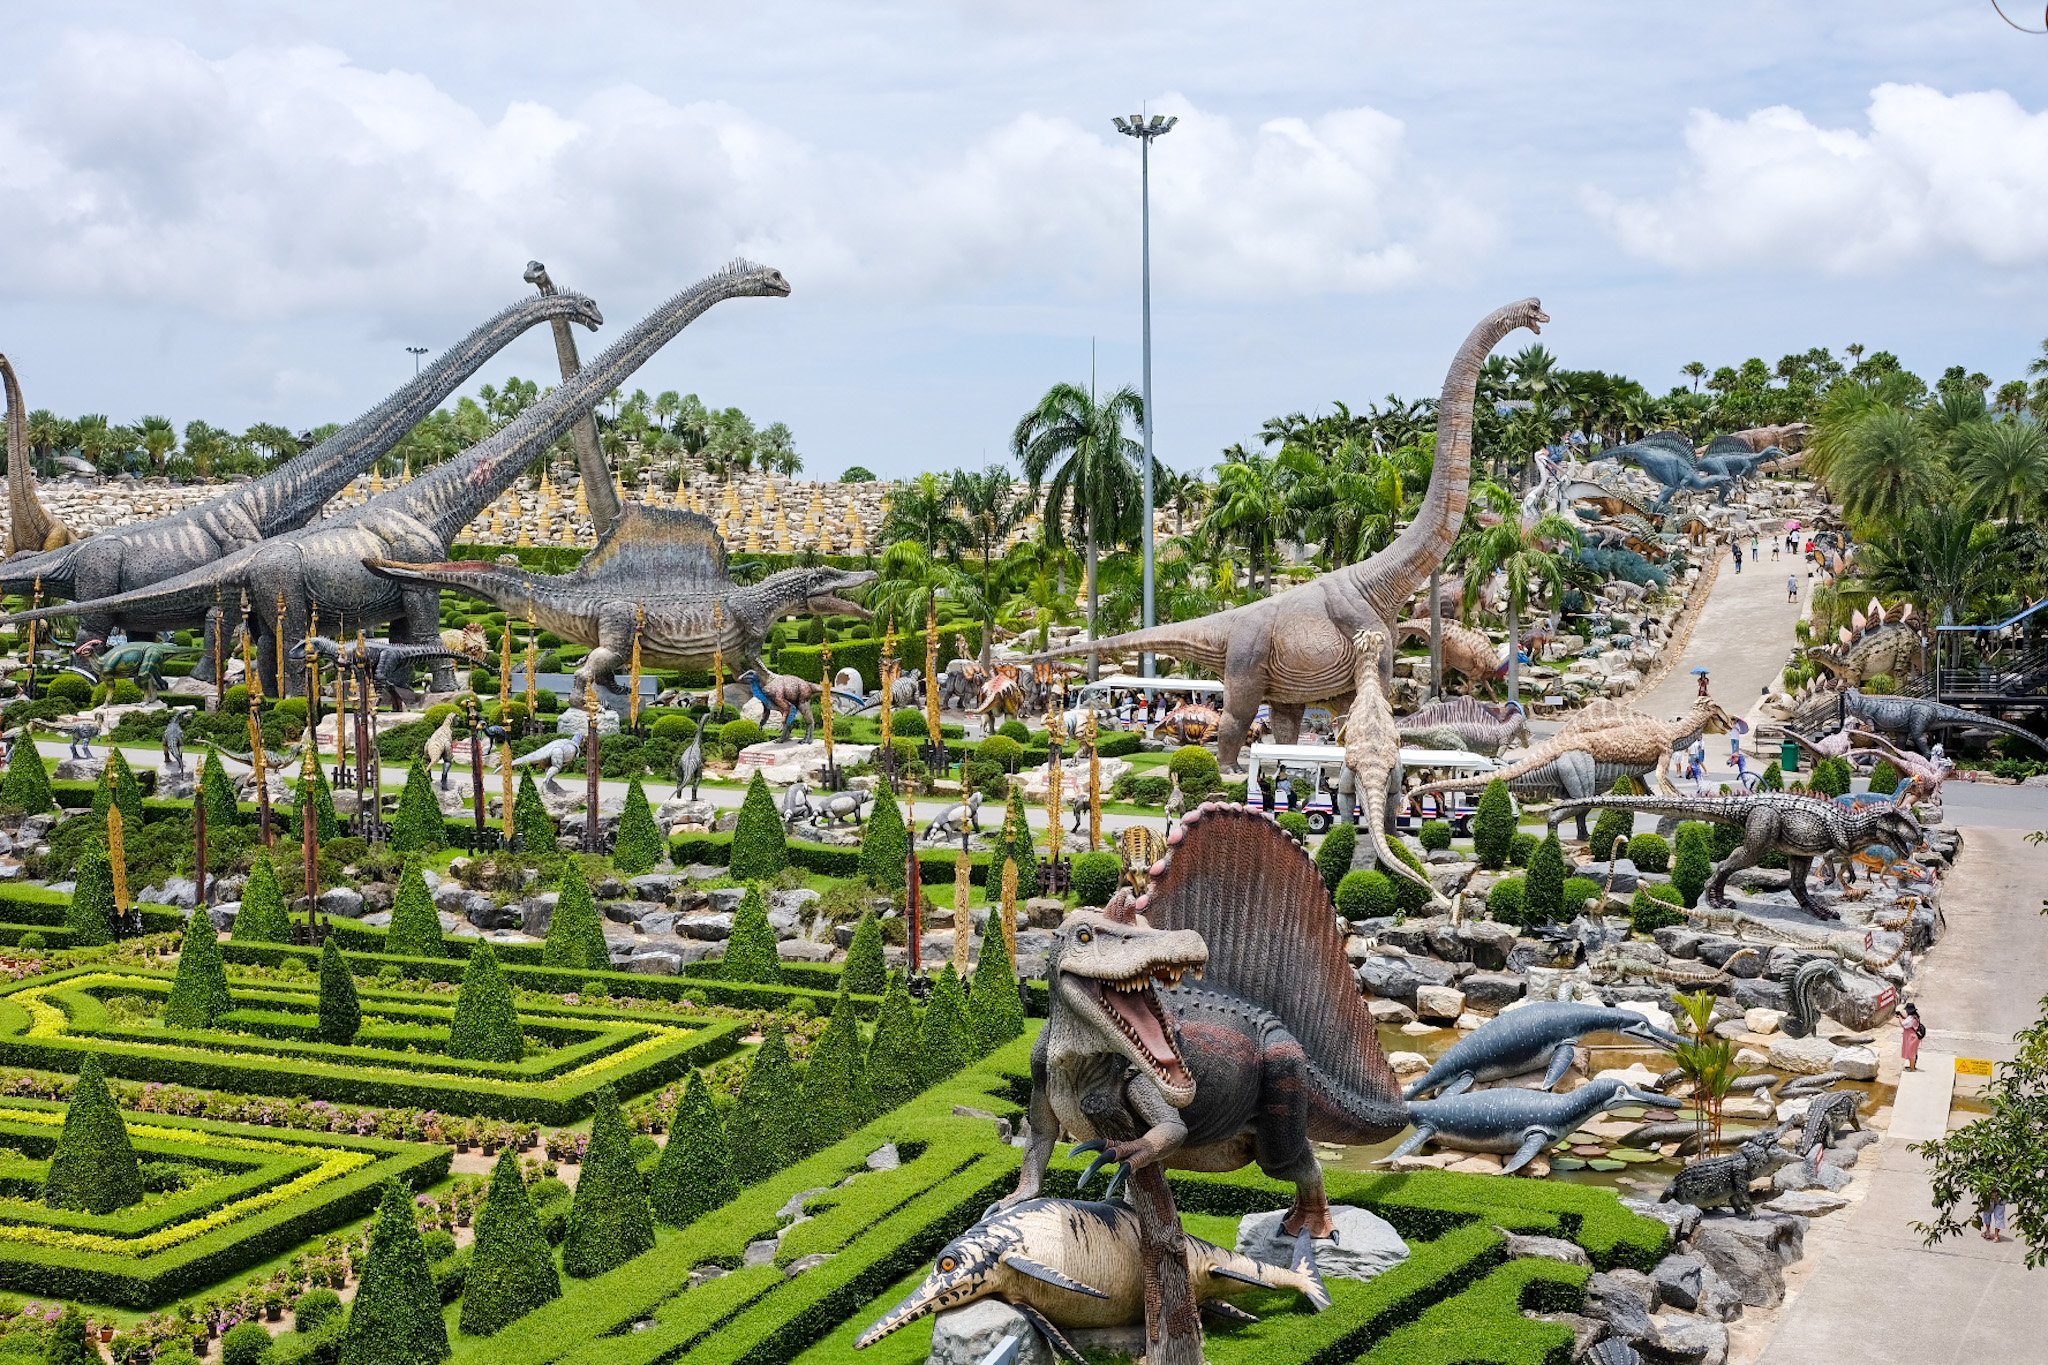 Nong Nooch Botanical Garden in Pattaya, the Jurassic Park of Thailand